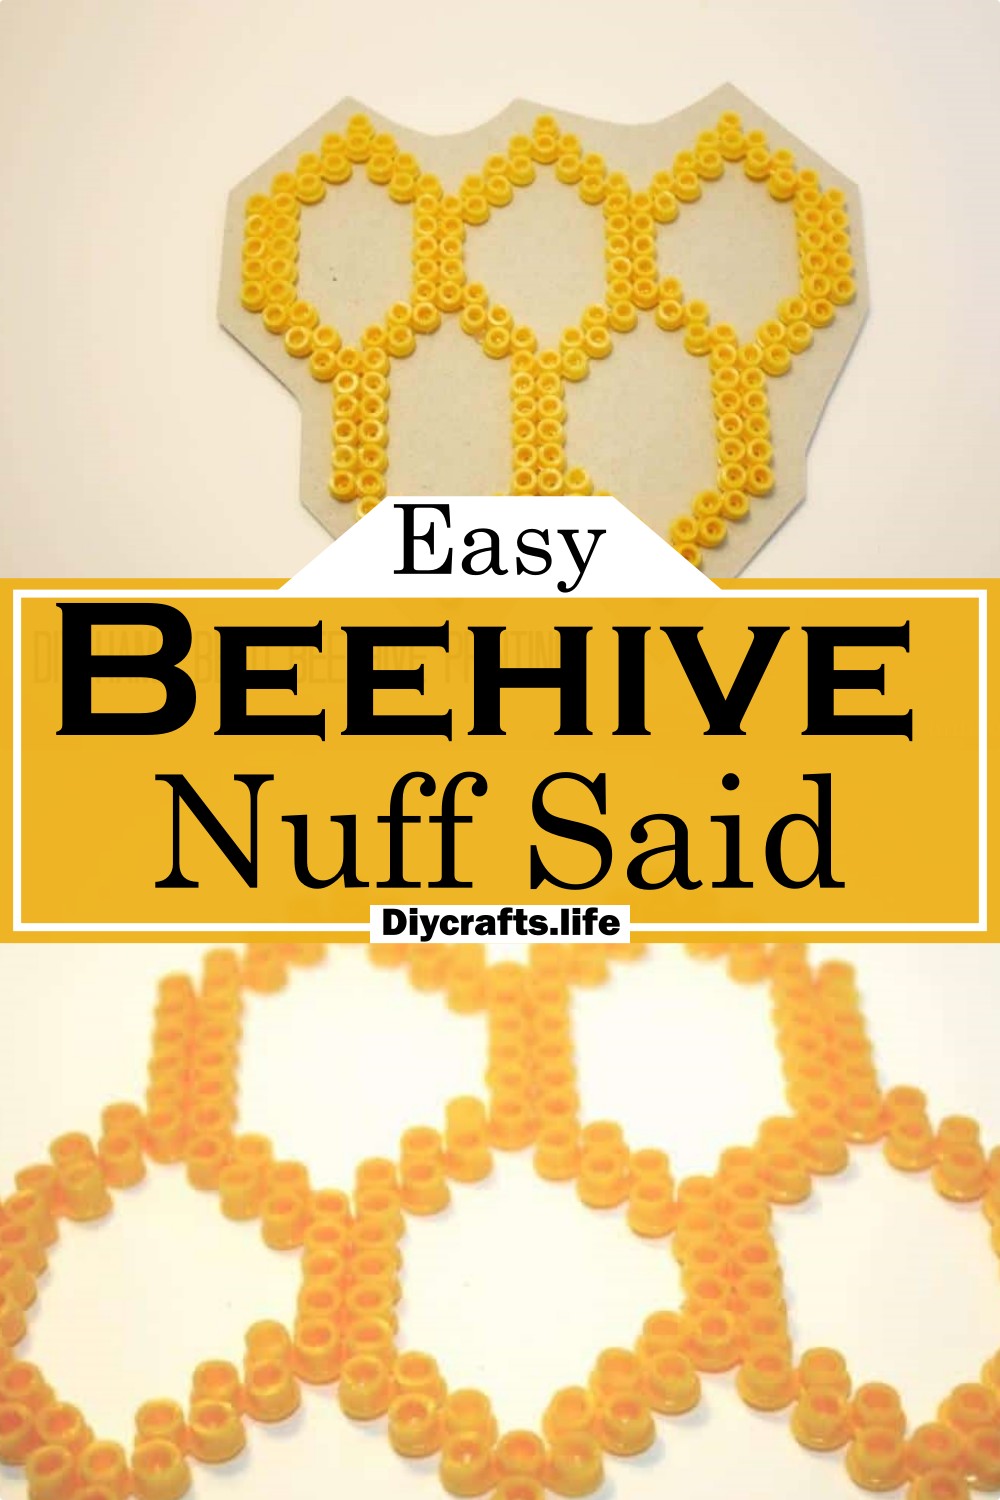 Beehive Nuff Said In Hexagon Design